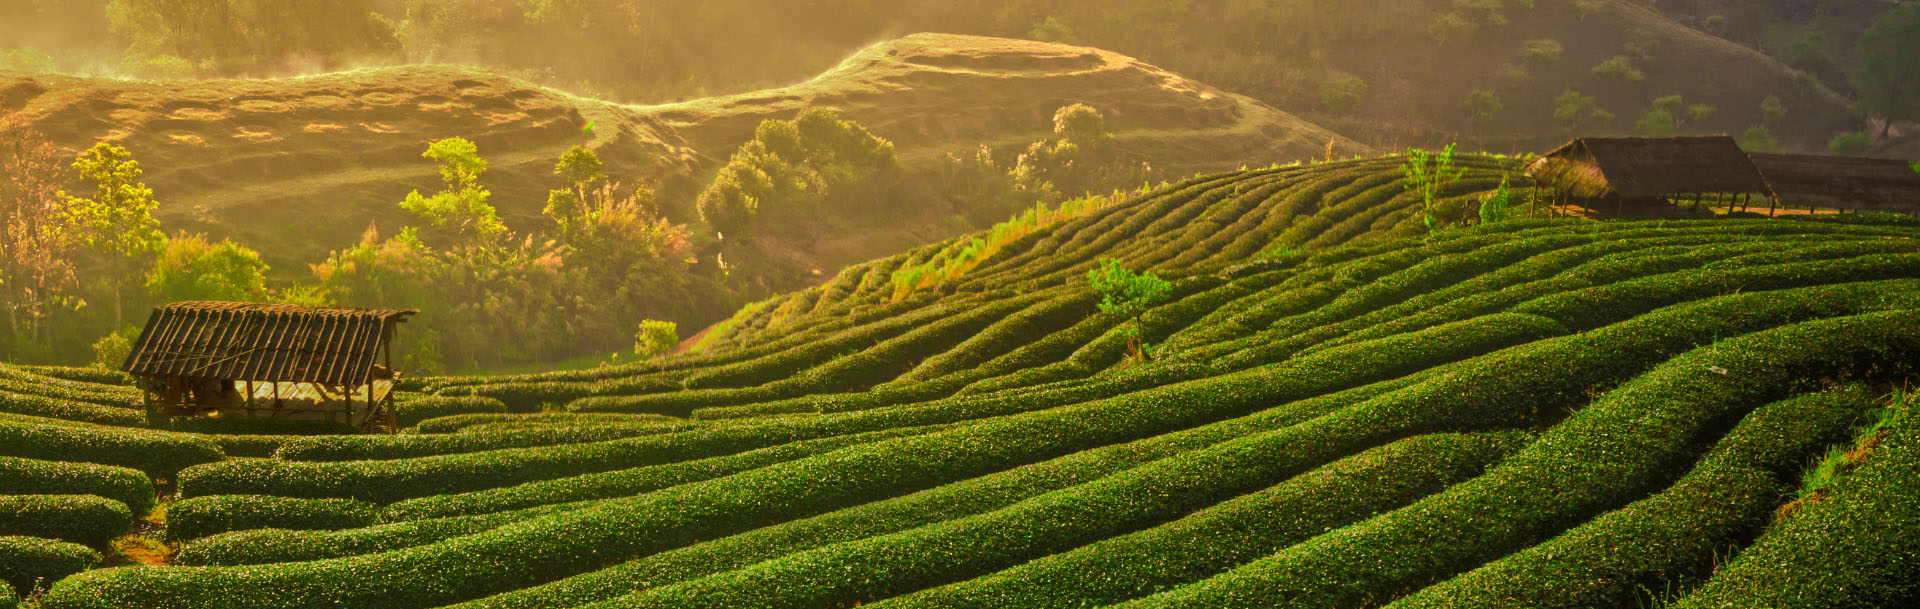 green hilly tea plantation before harvest in sunrise